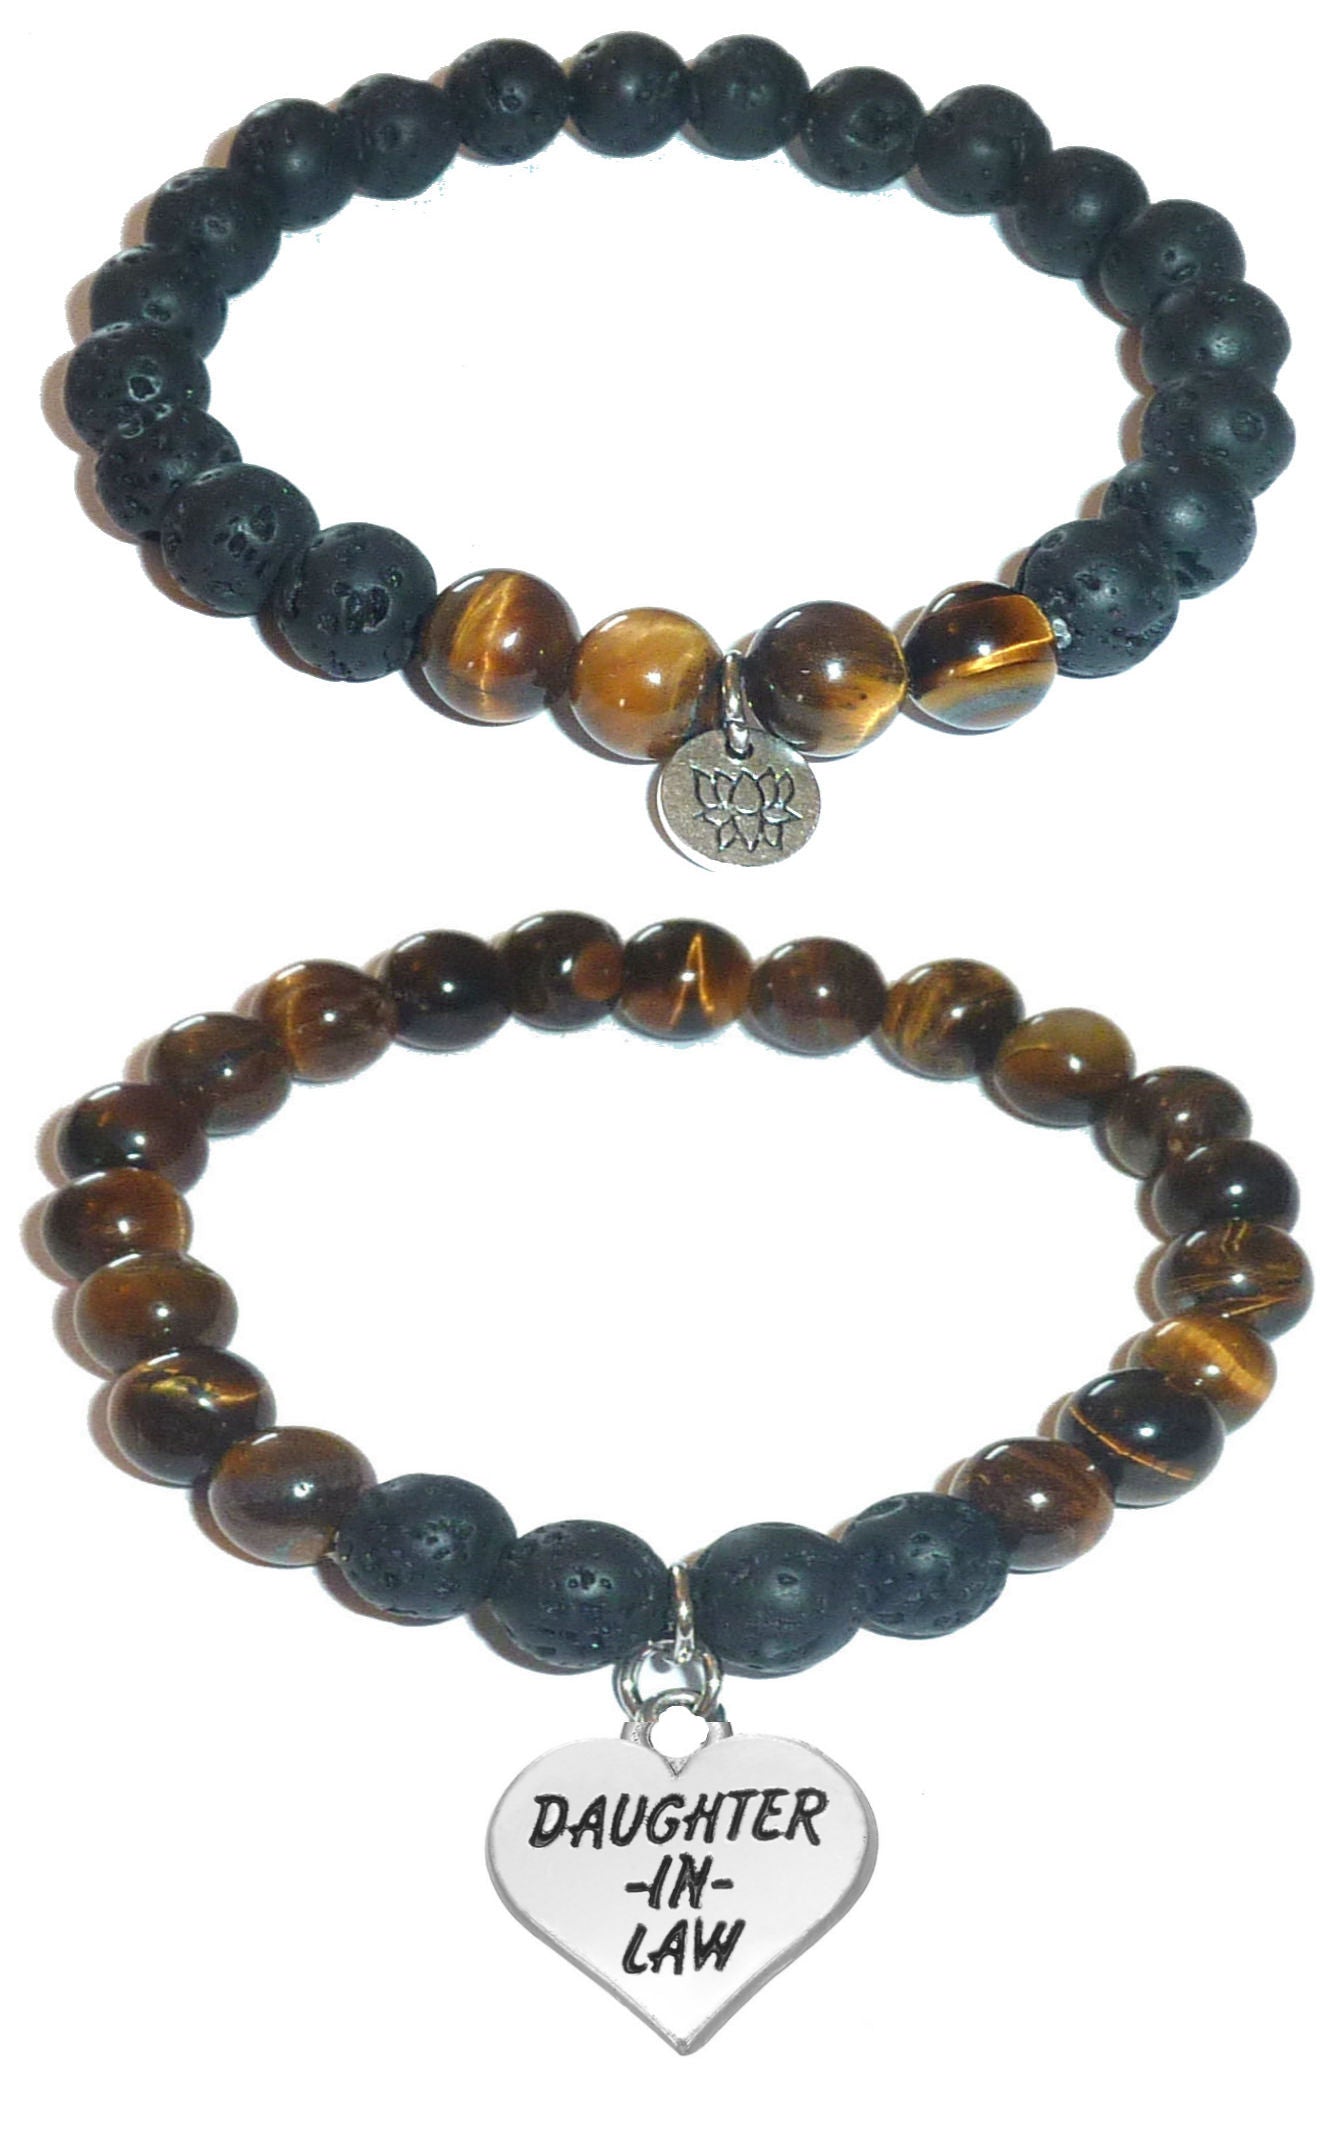 Daughter In Law - Women's Tiger Eye & Black Lava Diffuser Yoga Beads Charm Stretch Bracelet Gift Set